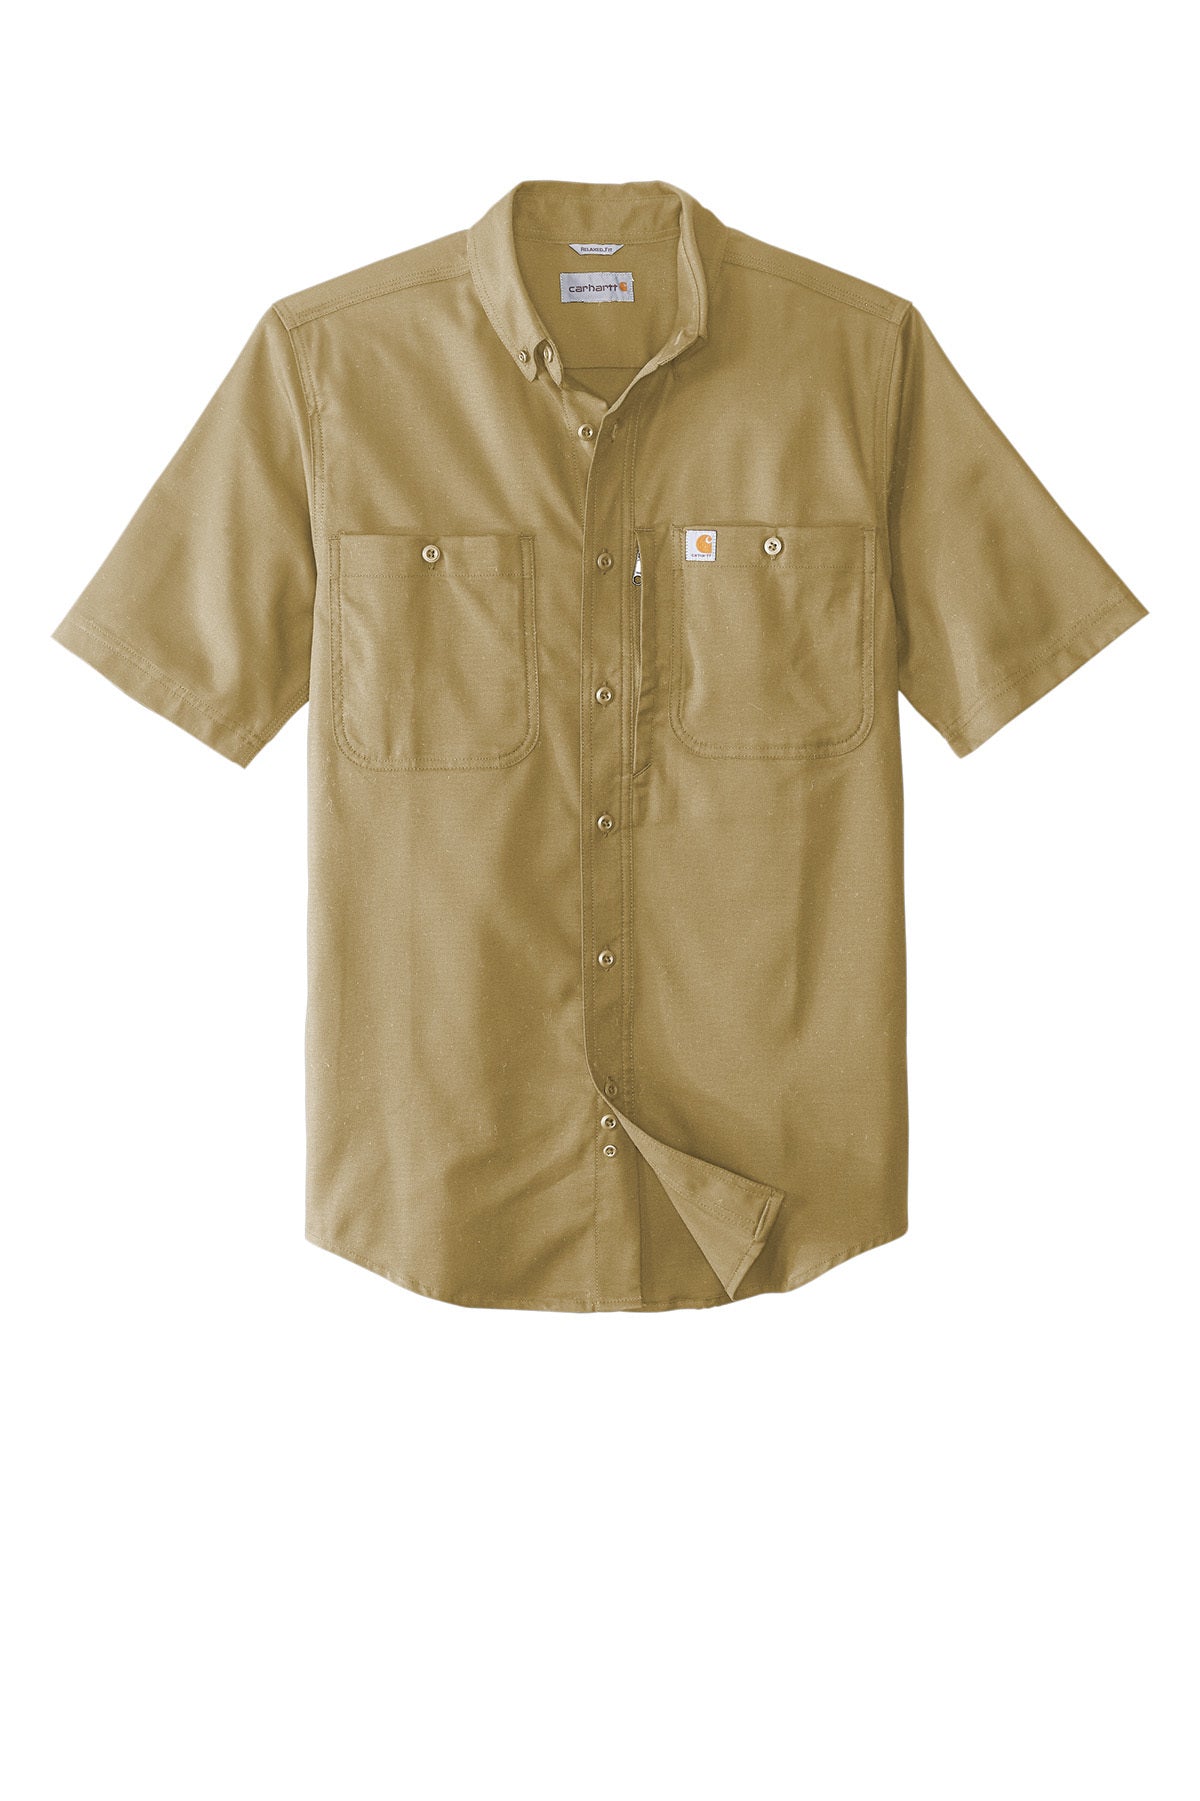 Carhartt® - Rugged Professional™ Series Short Sleeve Shirt - CT102537